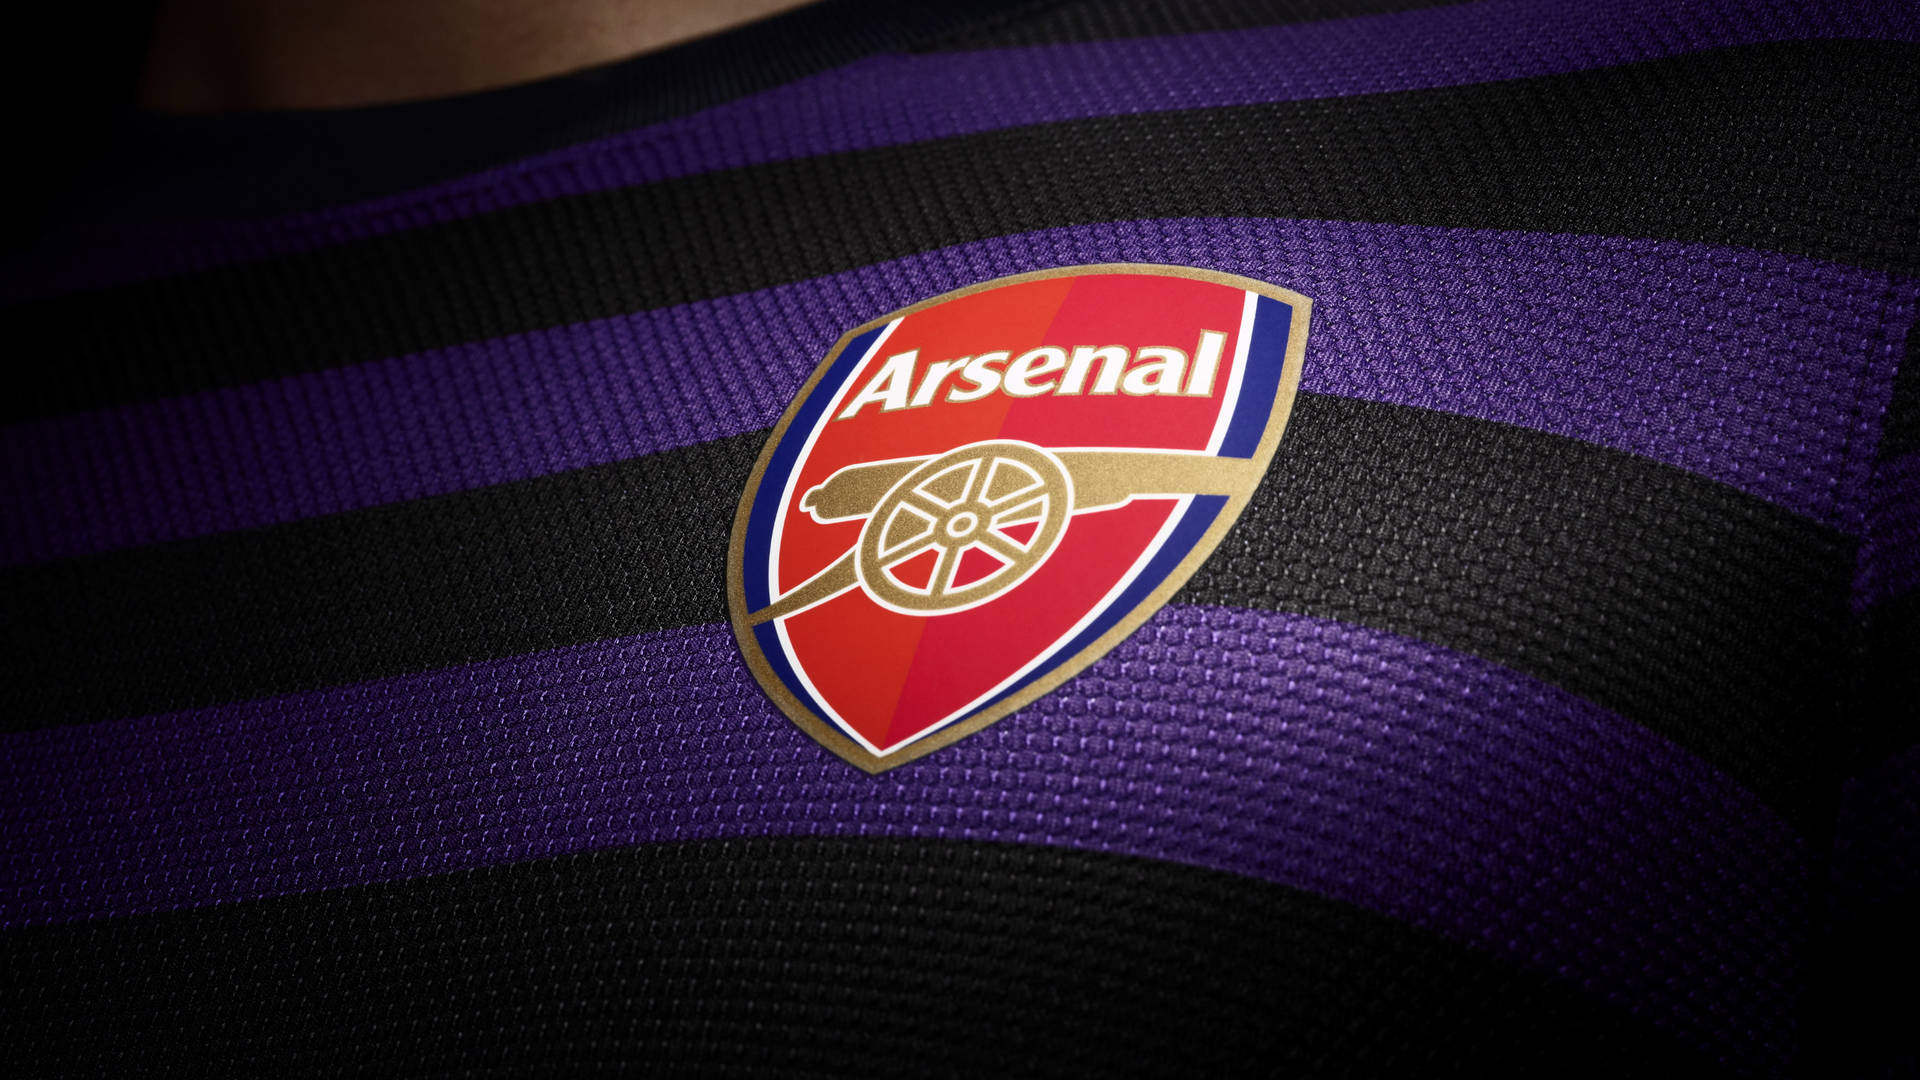 Arsenal Football Club T-shirt Background